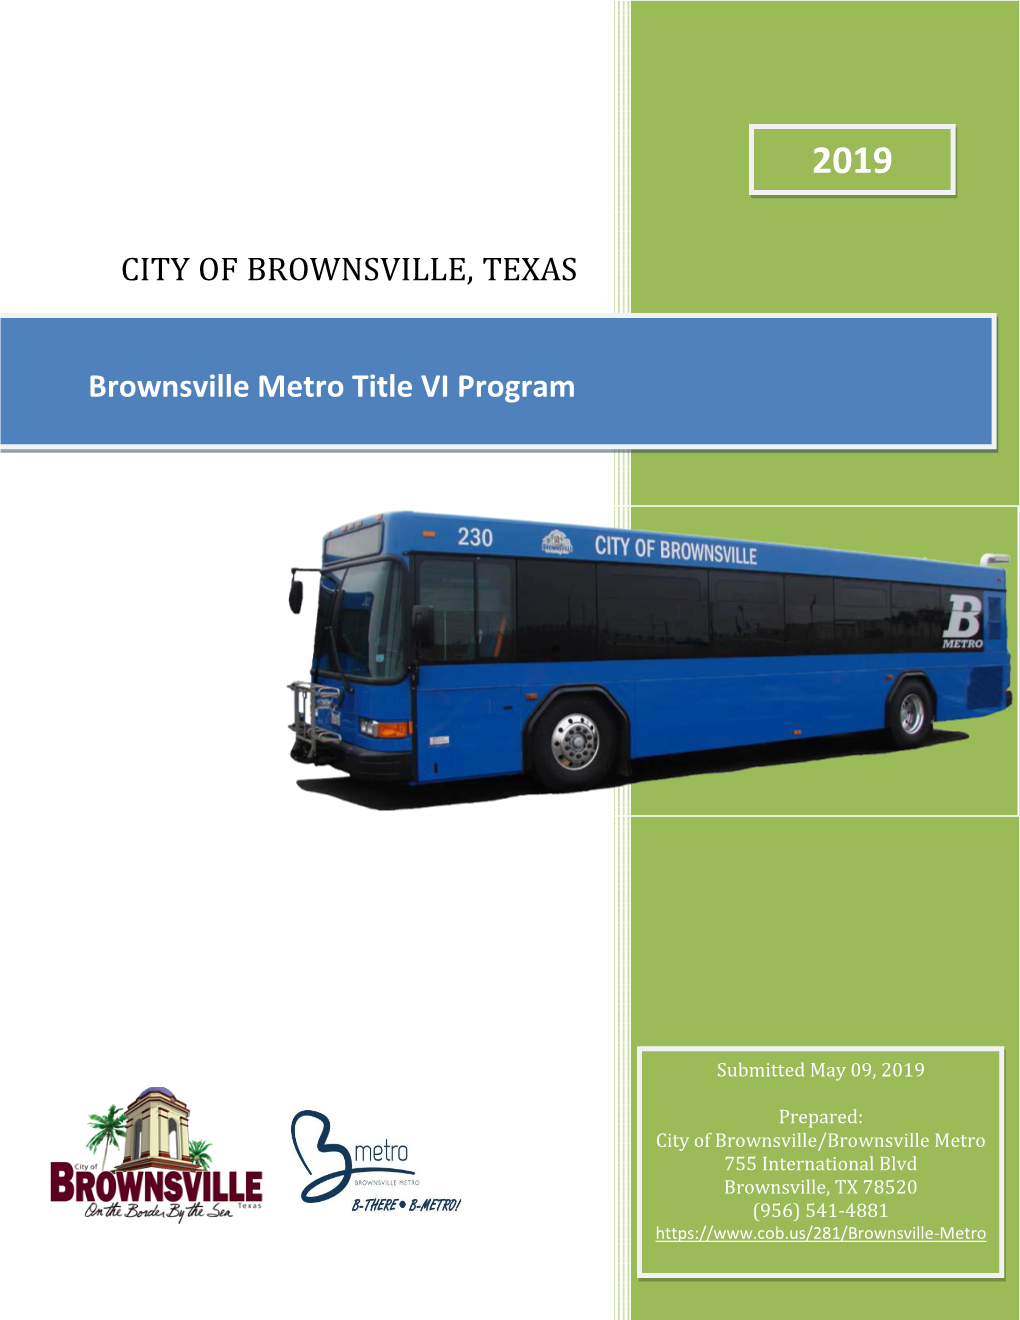 Brownsville Metro Title VI Program